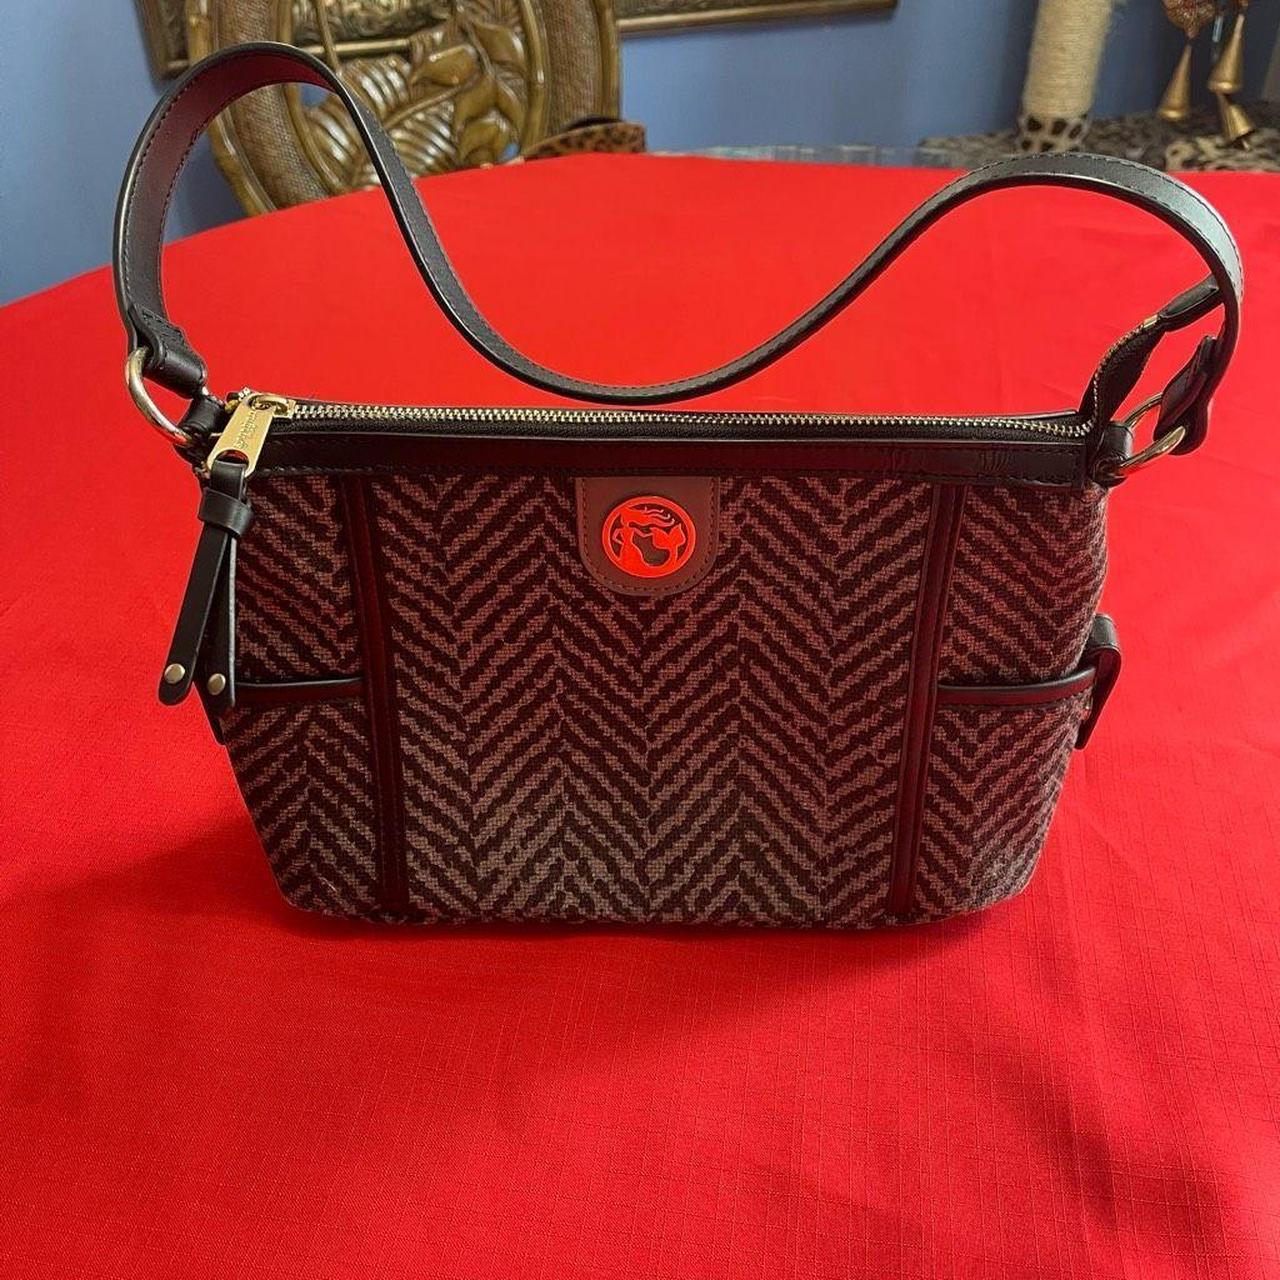 SPARTINA Linen Canvas Tote Purse Handbag Island Bag Red Colorful Lined  Shopper | eBay